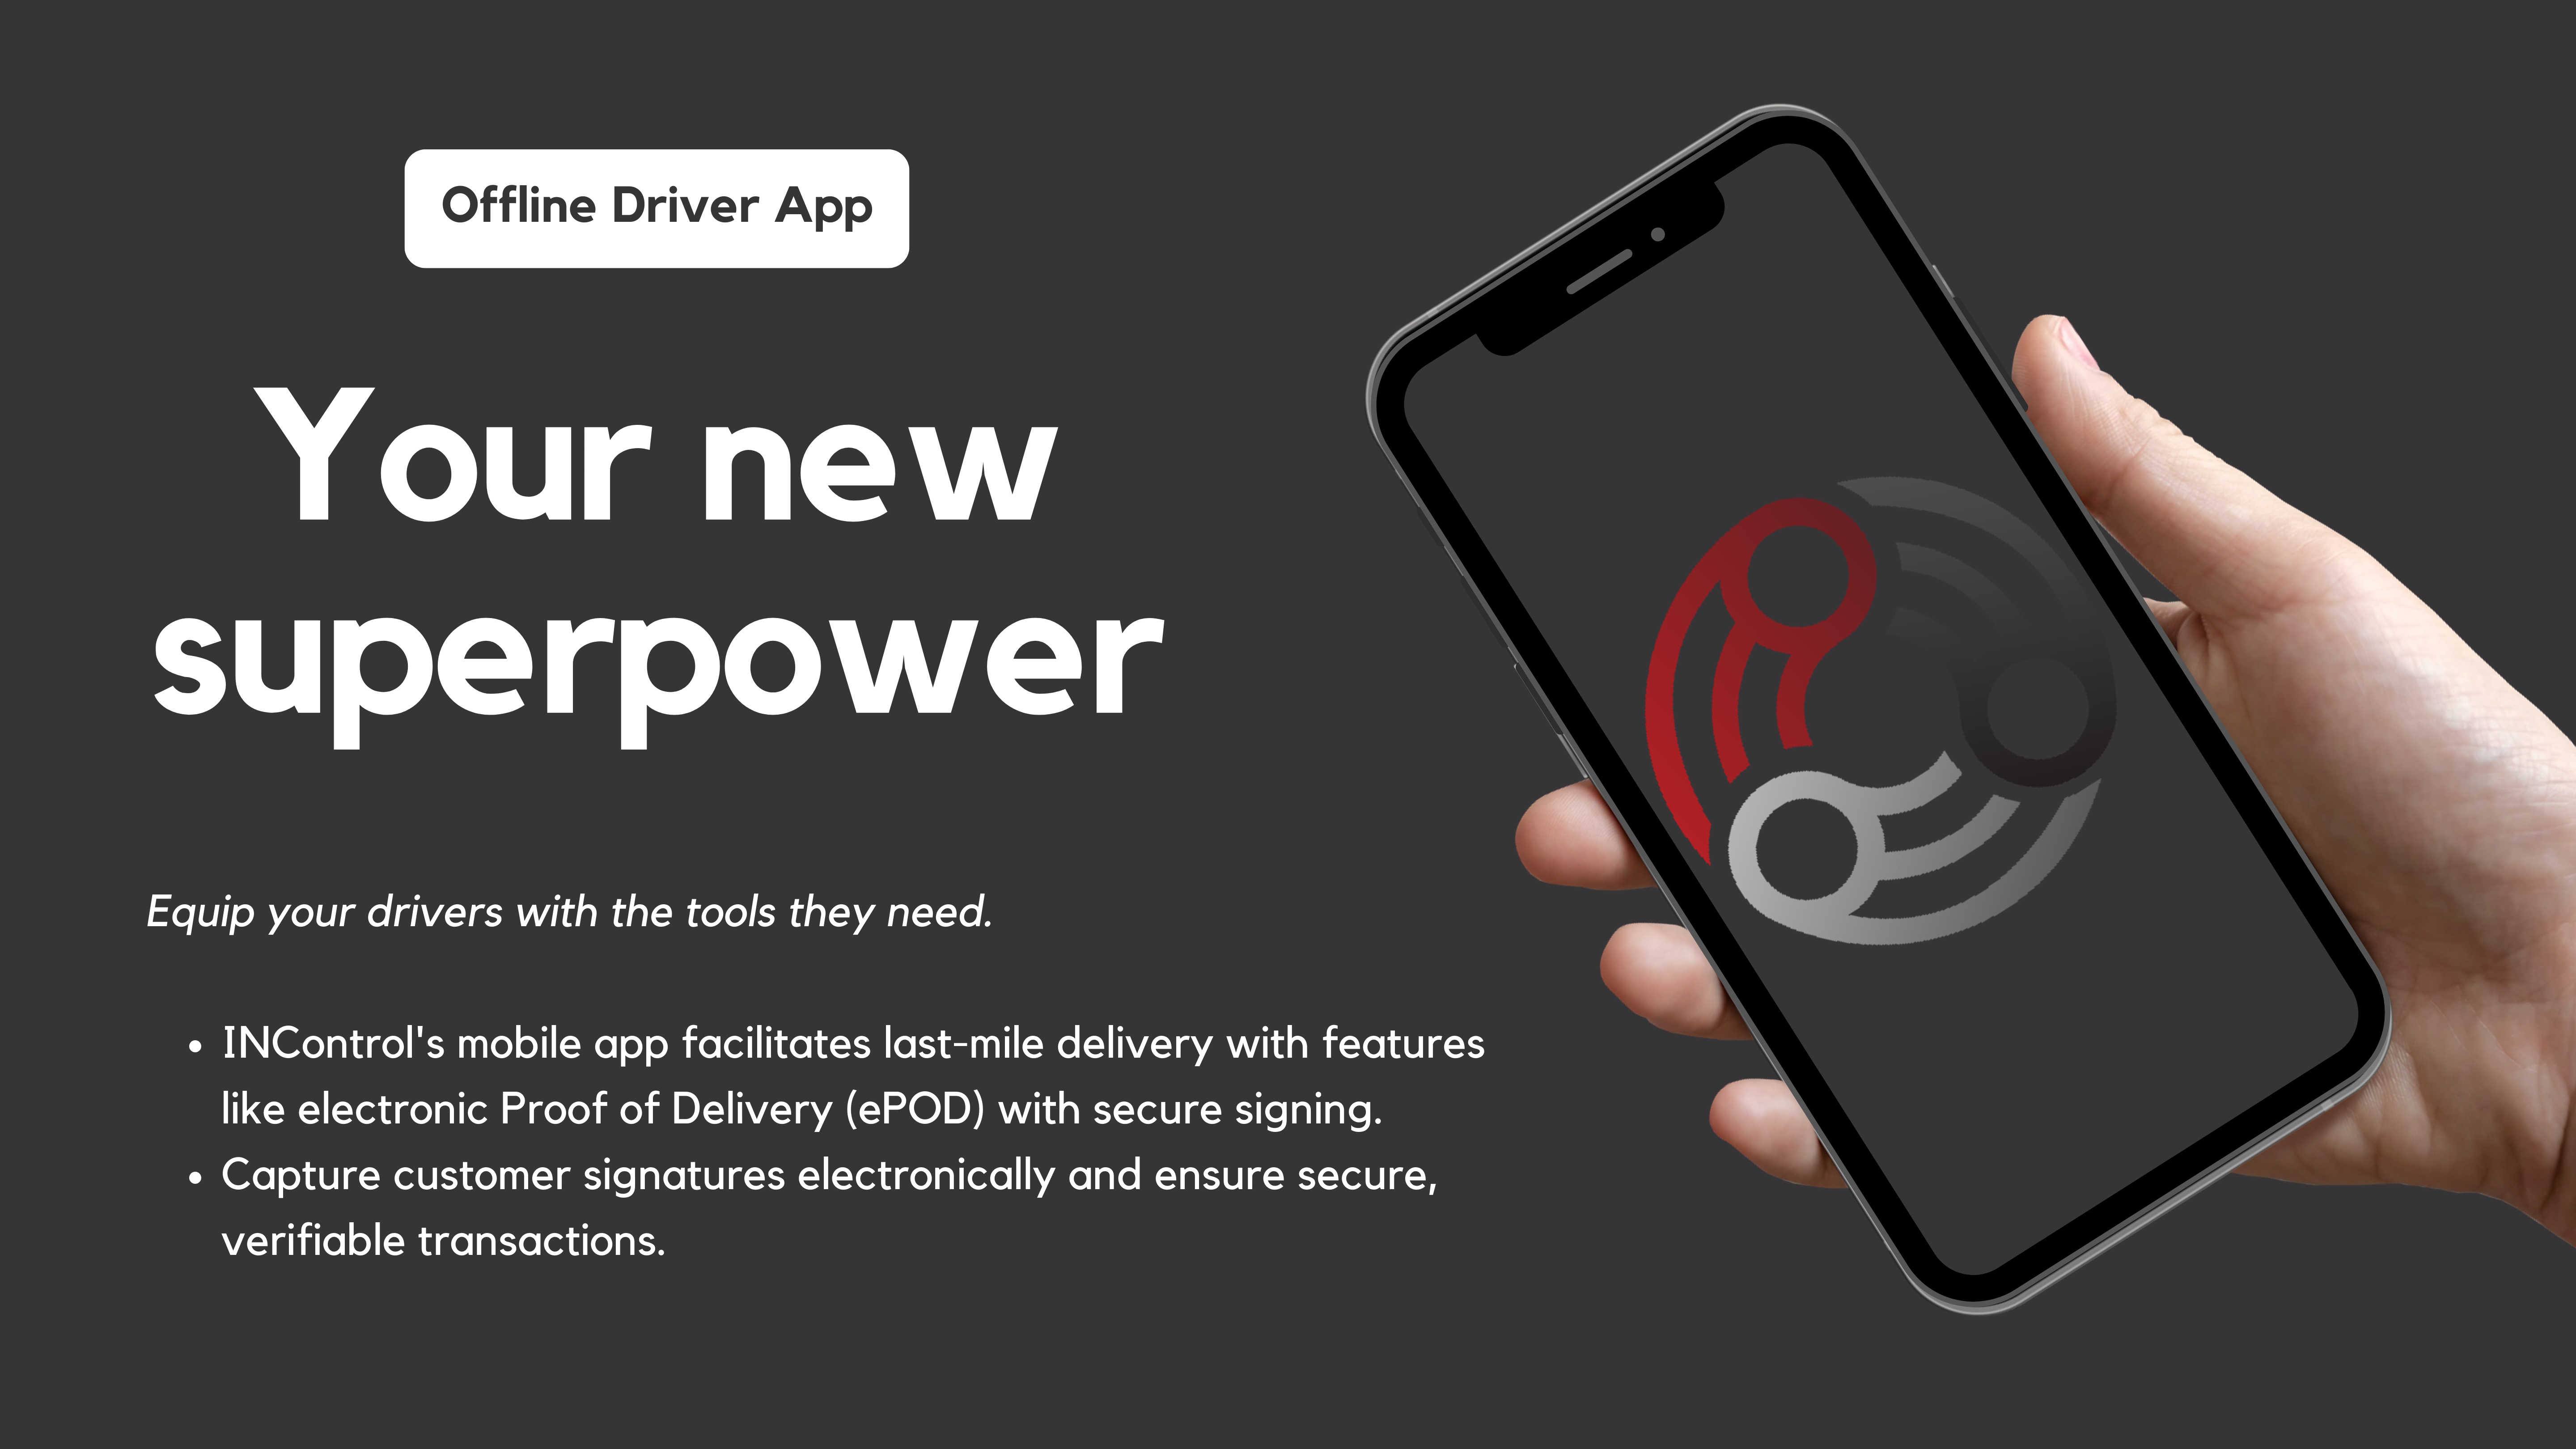 Offline Driver App - Your new Superpower | Fleet Management you can Trust